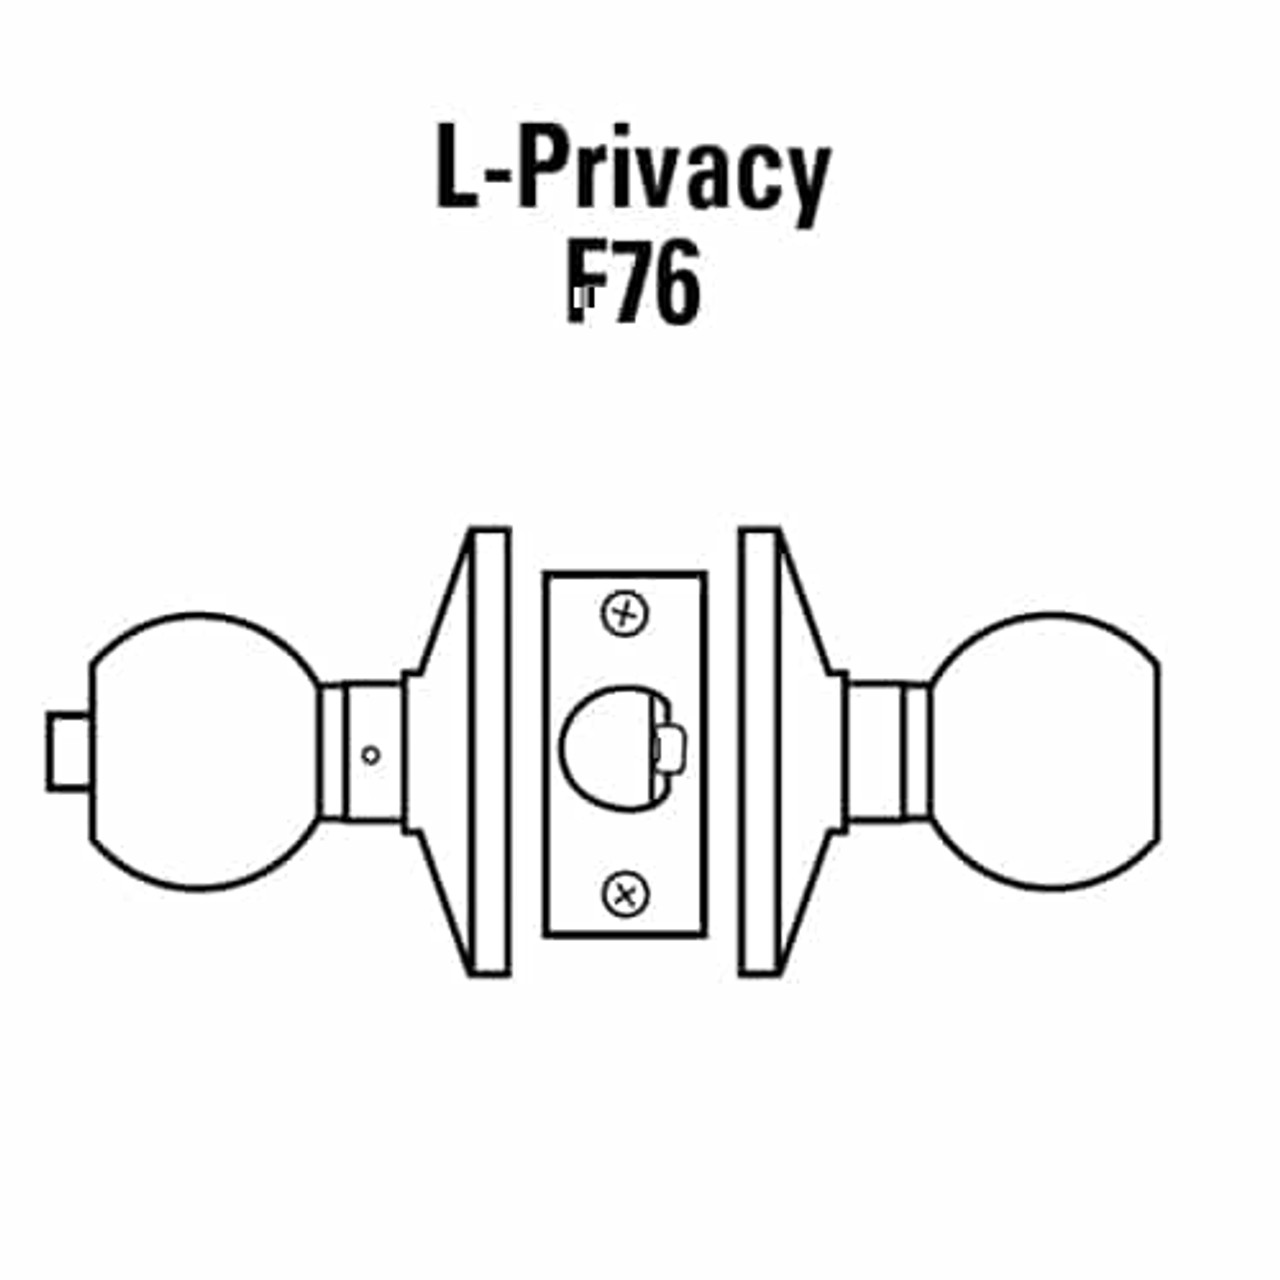 6K30L4CSTK605 Best 6K Series Privacy Medium Duty Cylindrical Knob Locks with Round Style in Bright Brass